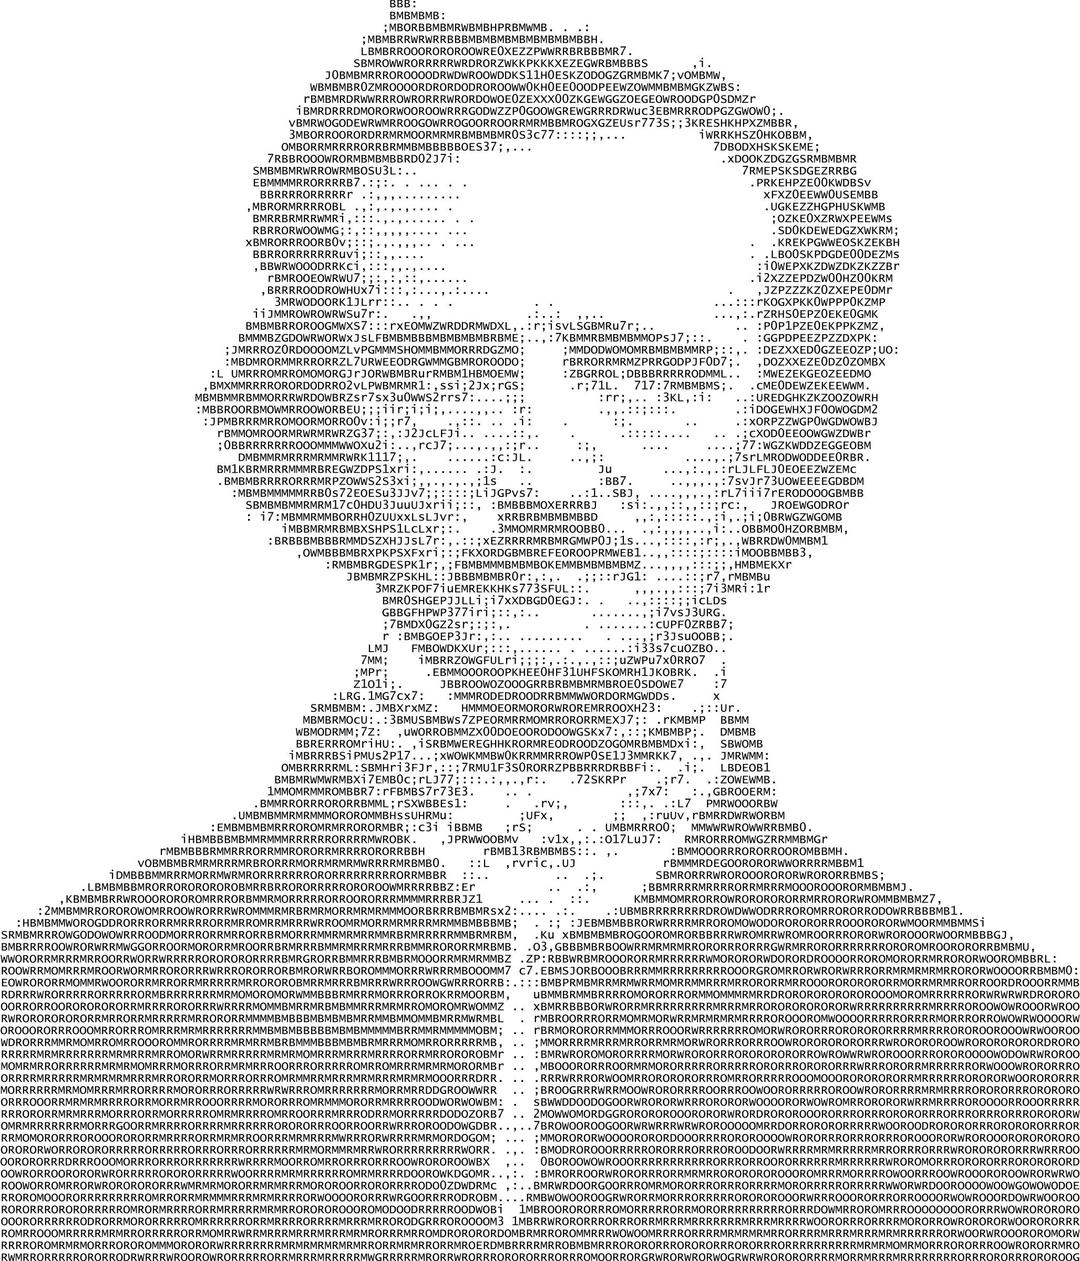 Edgar Allan Poe png transparent